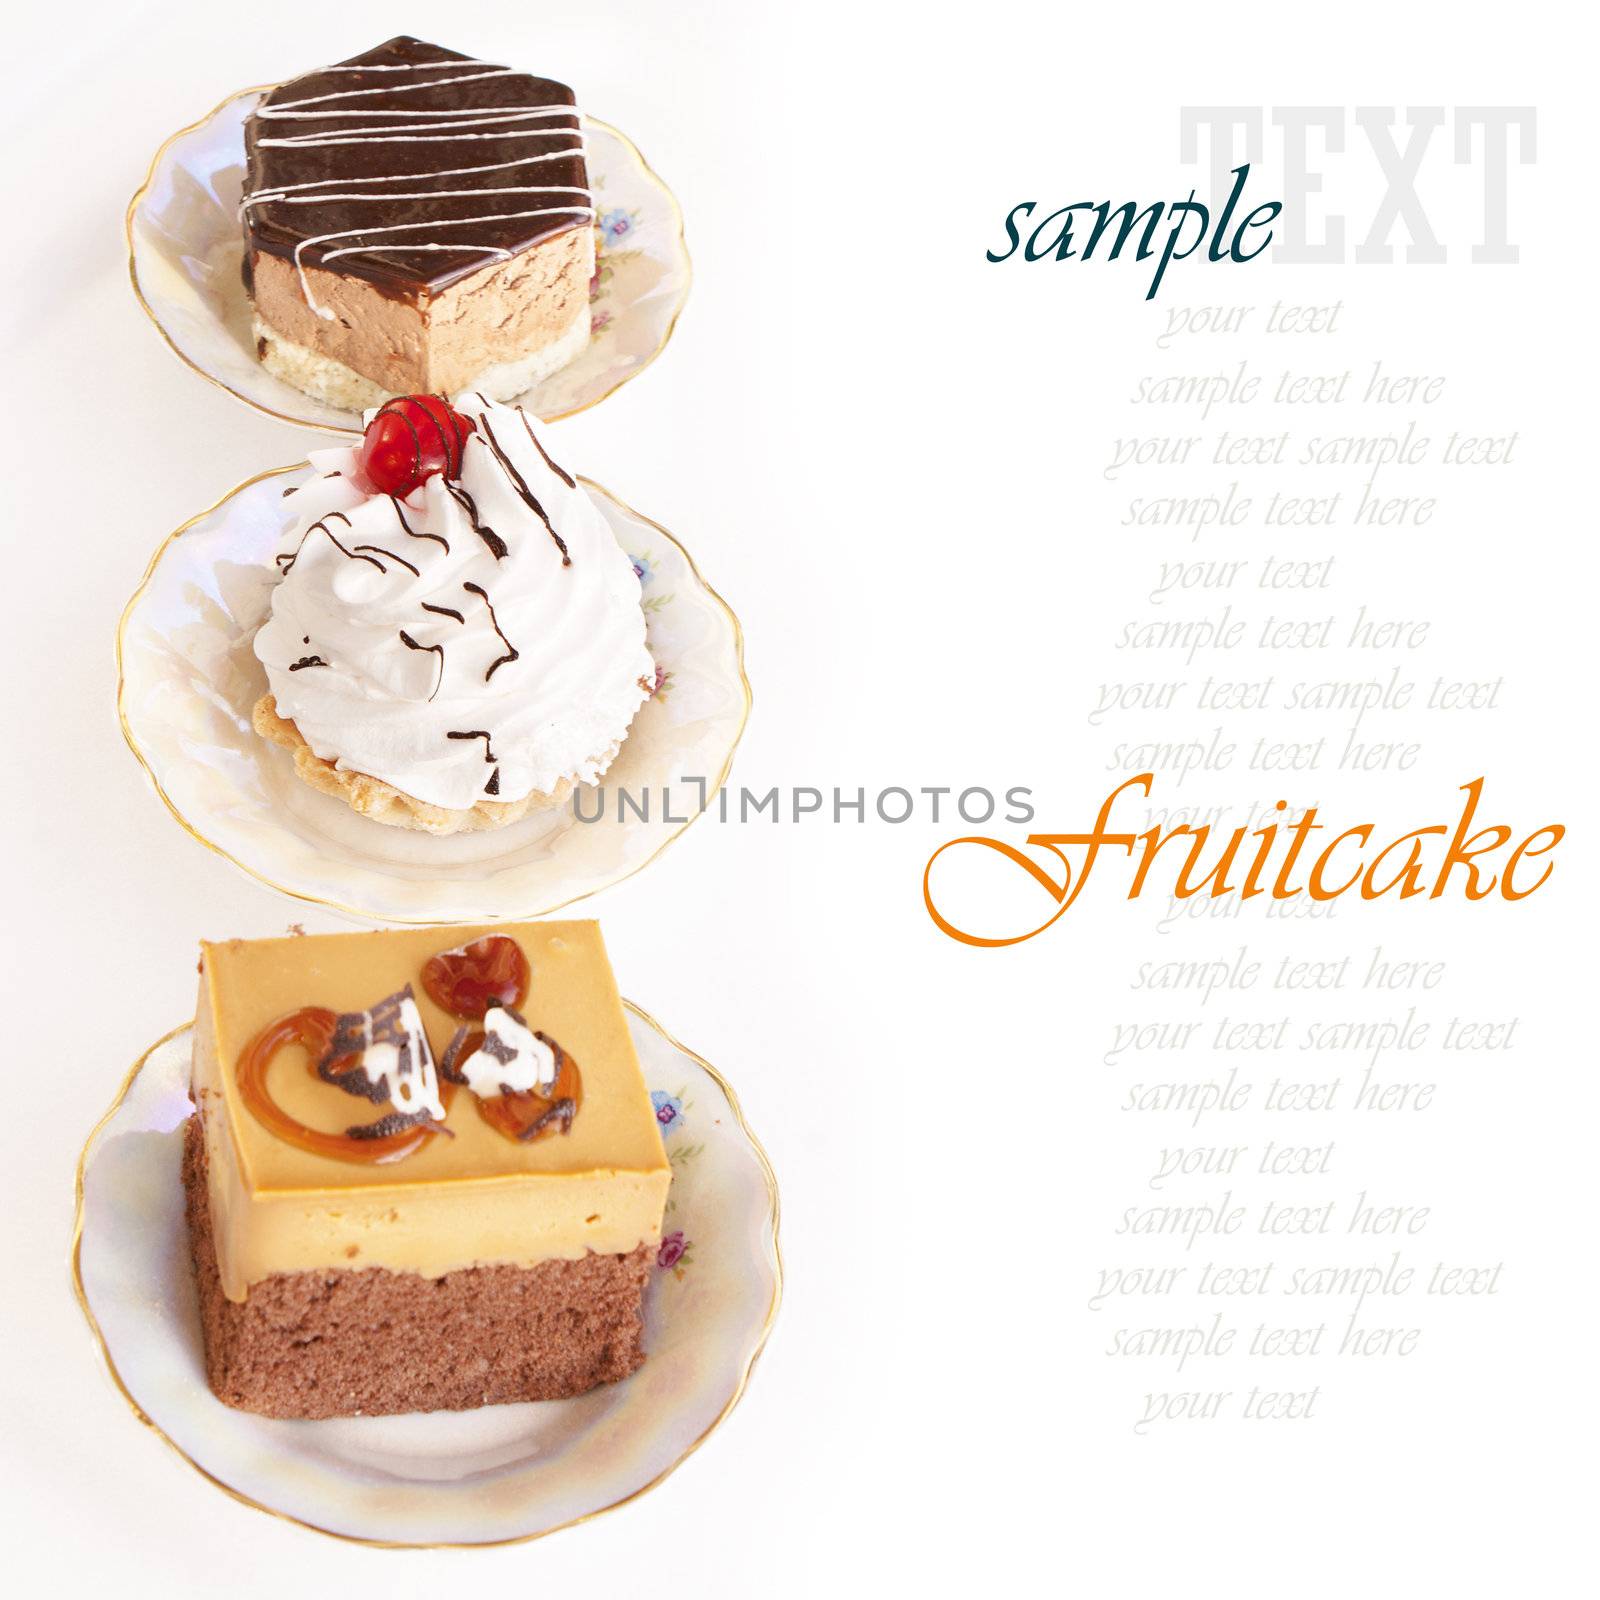 Fruitcake. Sweet dessert